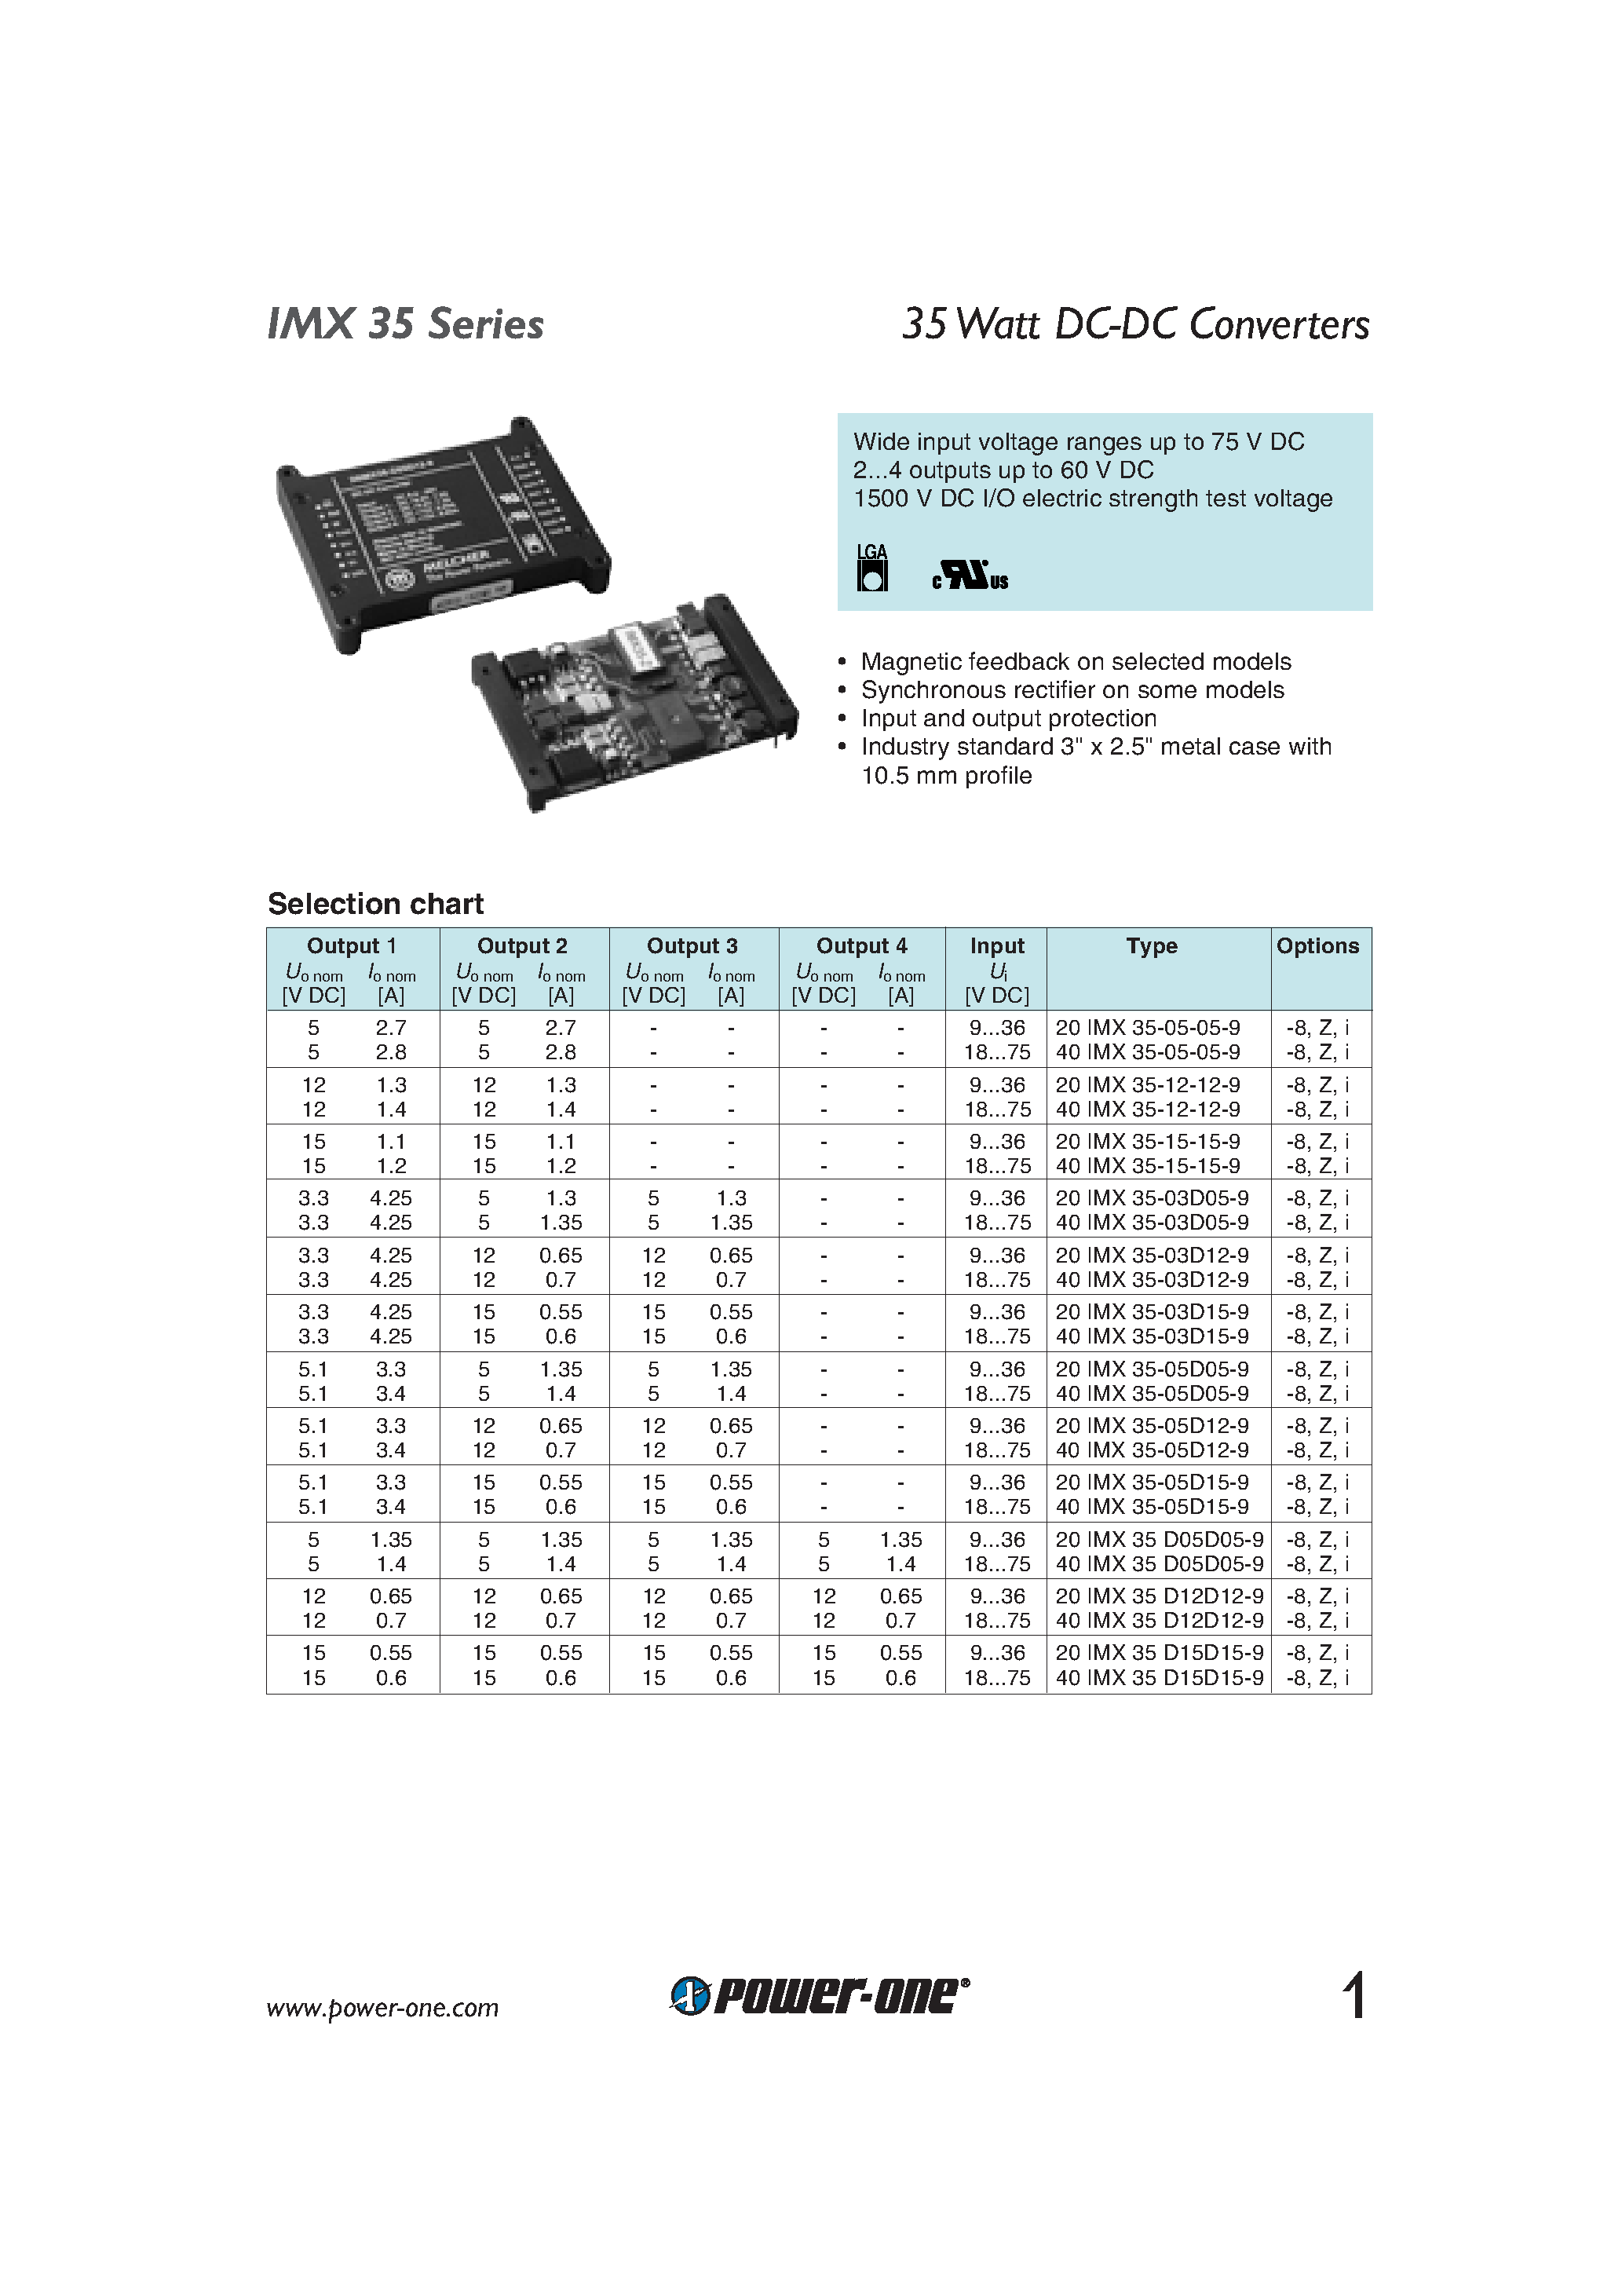 Datasheet 40IMX35-03D15-9 - 35 Watt DC-DC Converters page 1